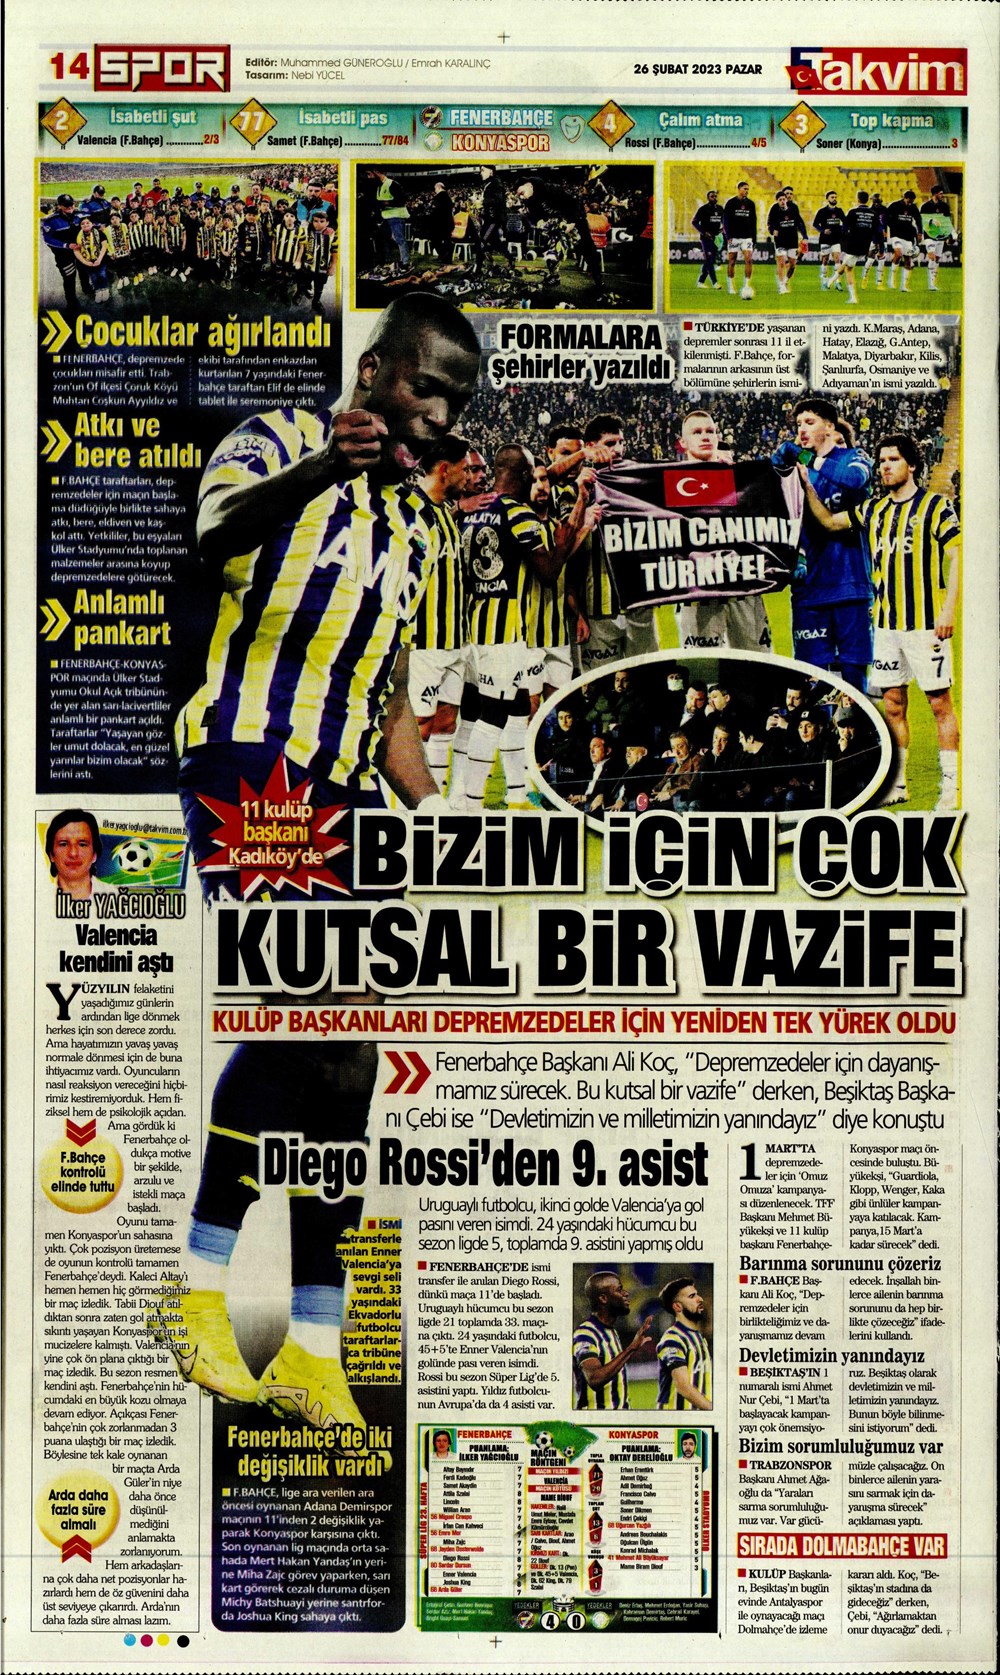 "Valenci'ağa' böyle istedi" - Sporun manşetleri  - 30. Foto